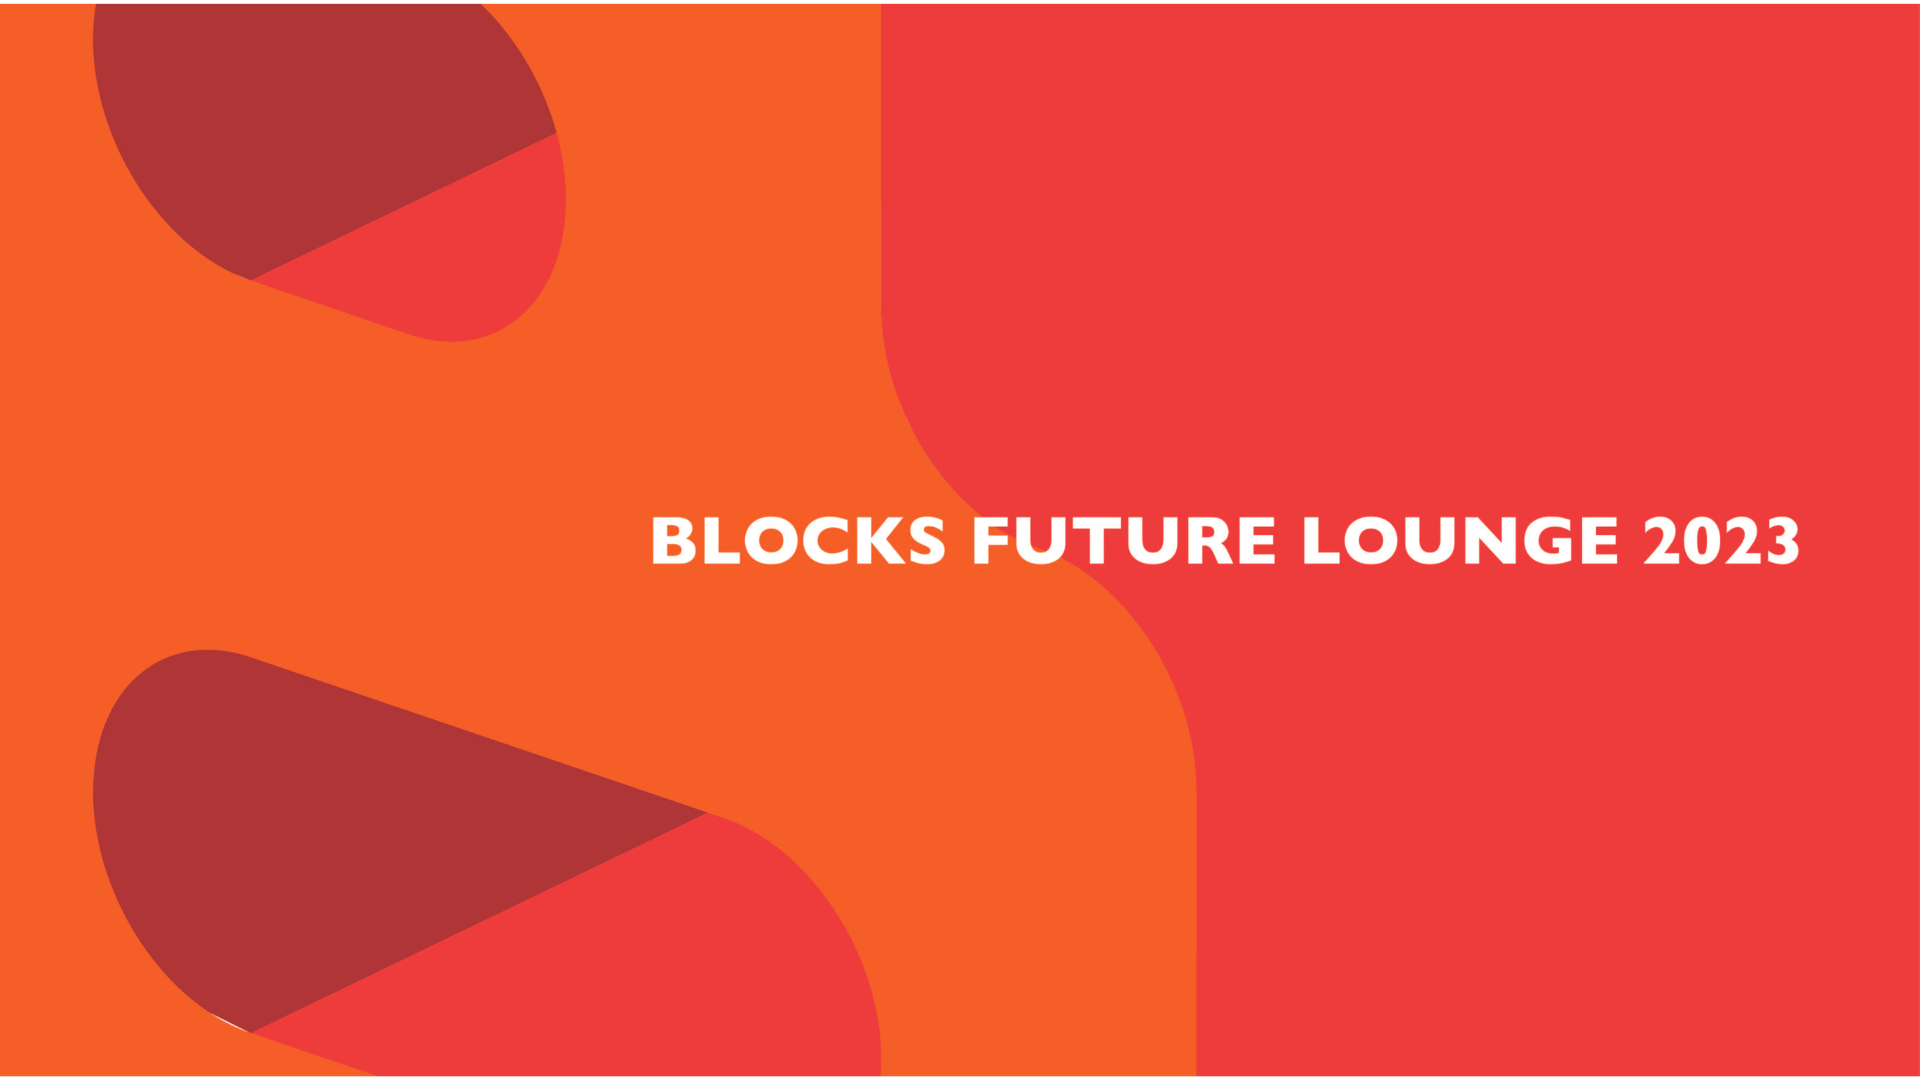 BLOCKS FUTURE LOUNGE 2023（成果発表会）のアーカイブを公開しました！